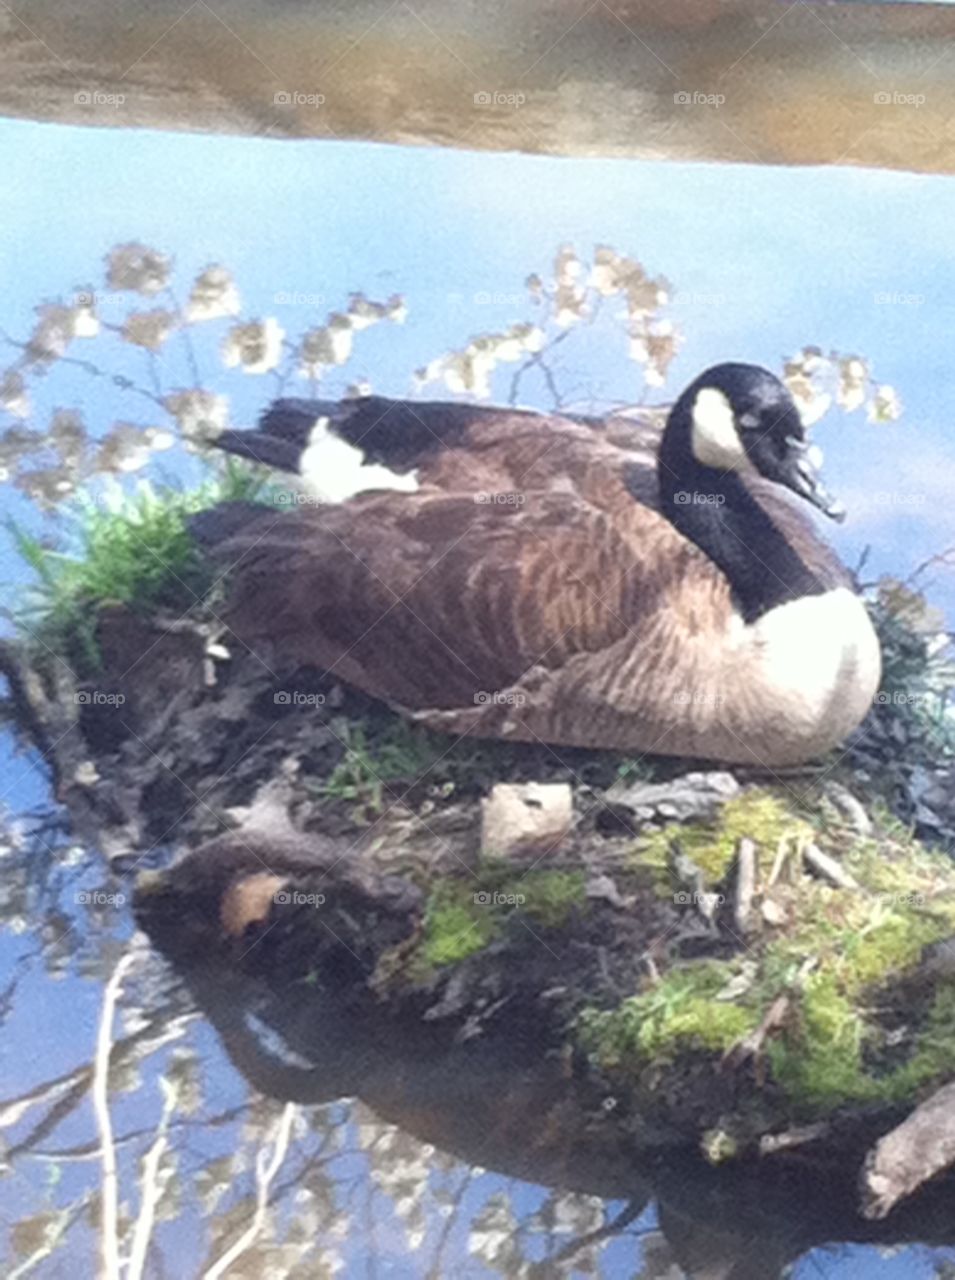 Nesting goose (photo taken by my 6-yr old daughter)